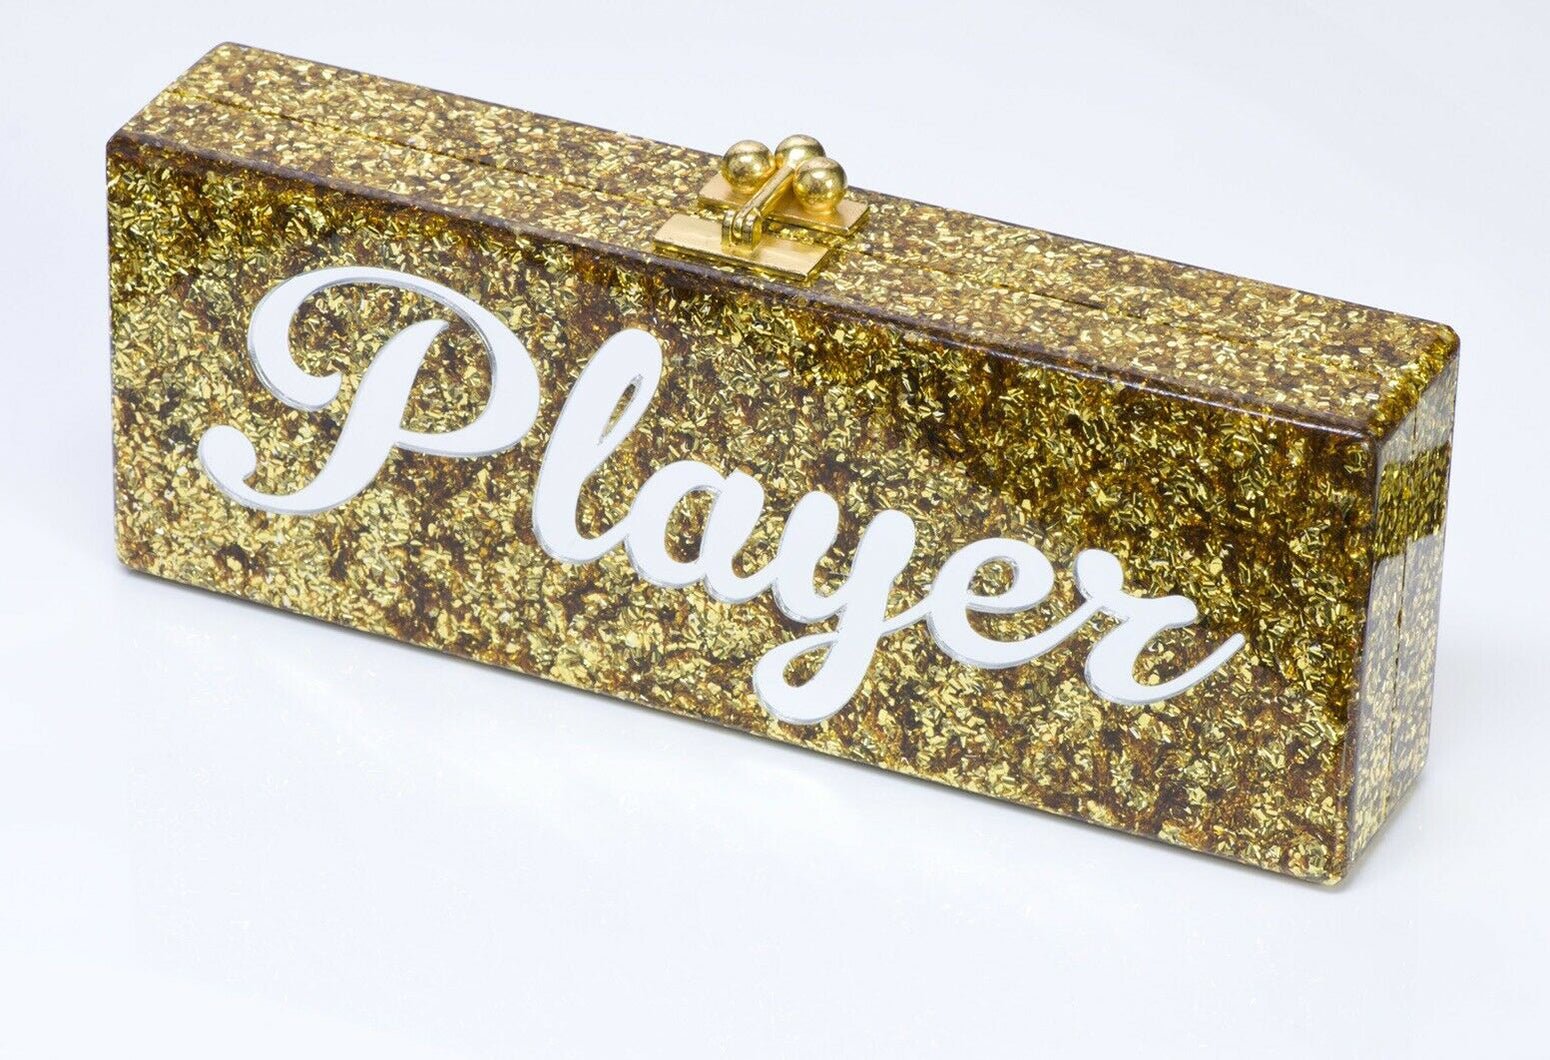 Edie Parker “PLAYER” Flavia Acrylic Gold Confetti Clutch Bag